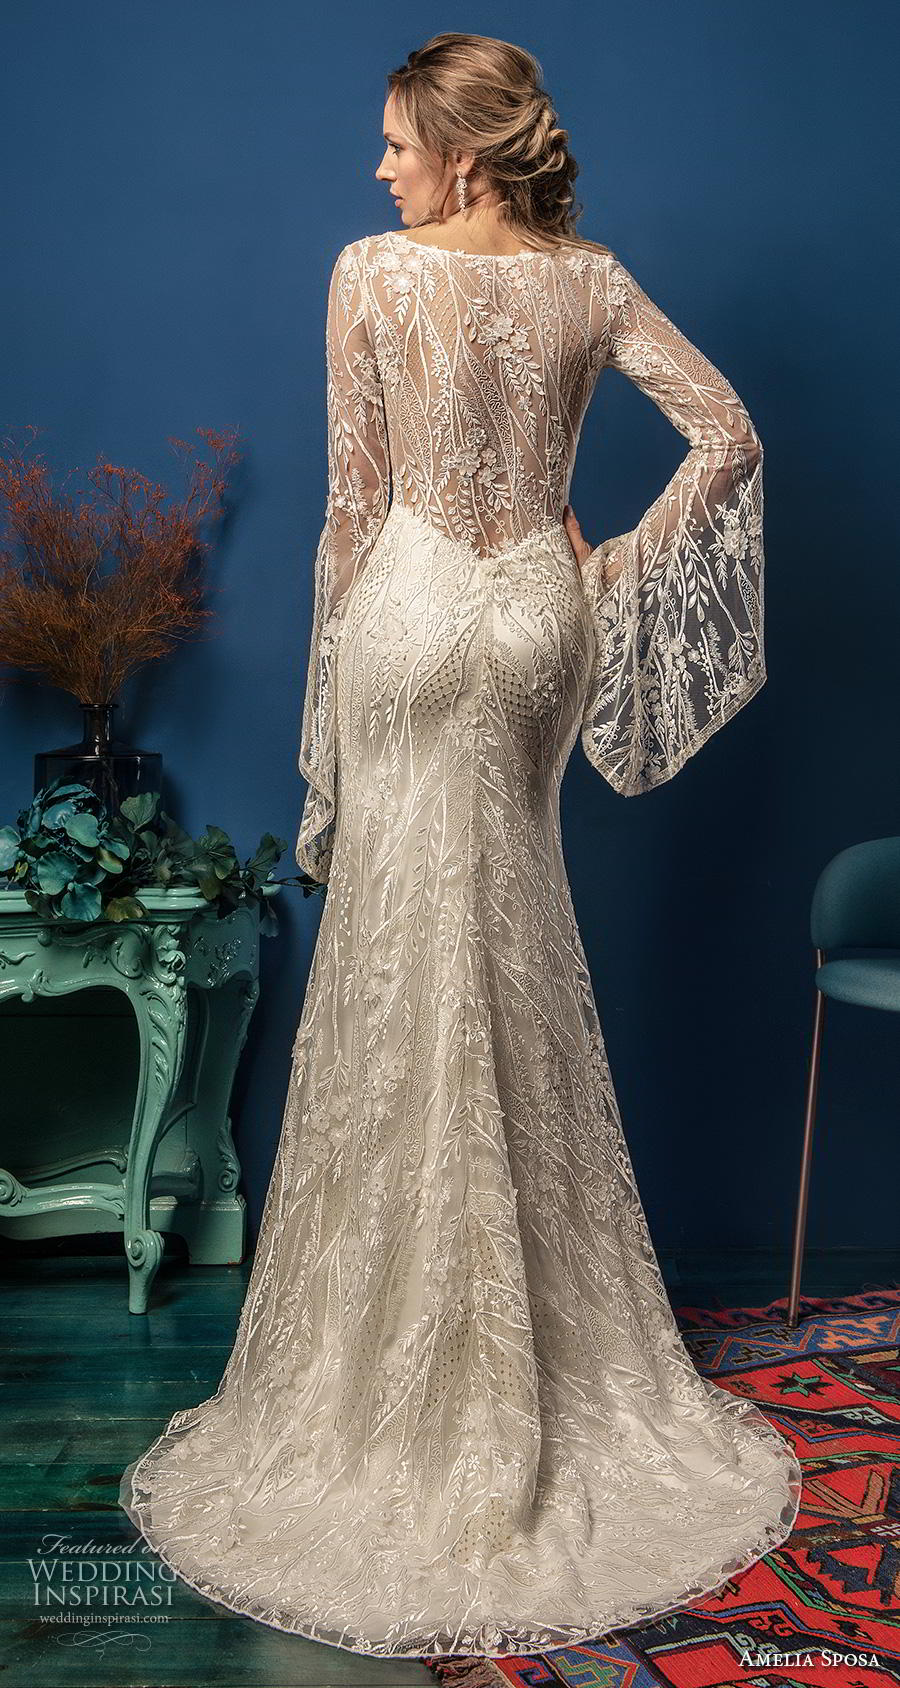 Amelia Sposa 2019 Wedding Dresses — “Elegance” Bridal Collection ...